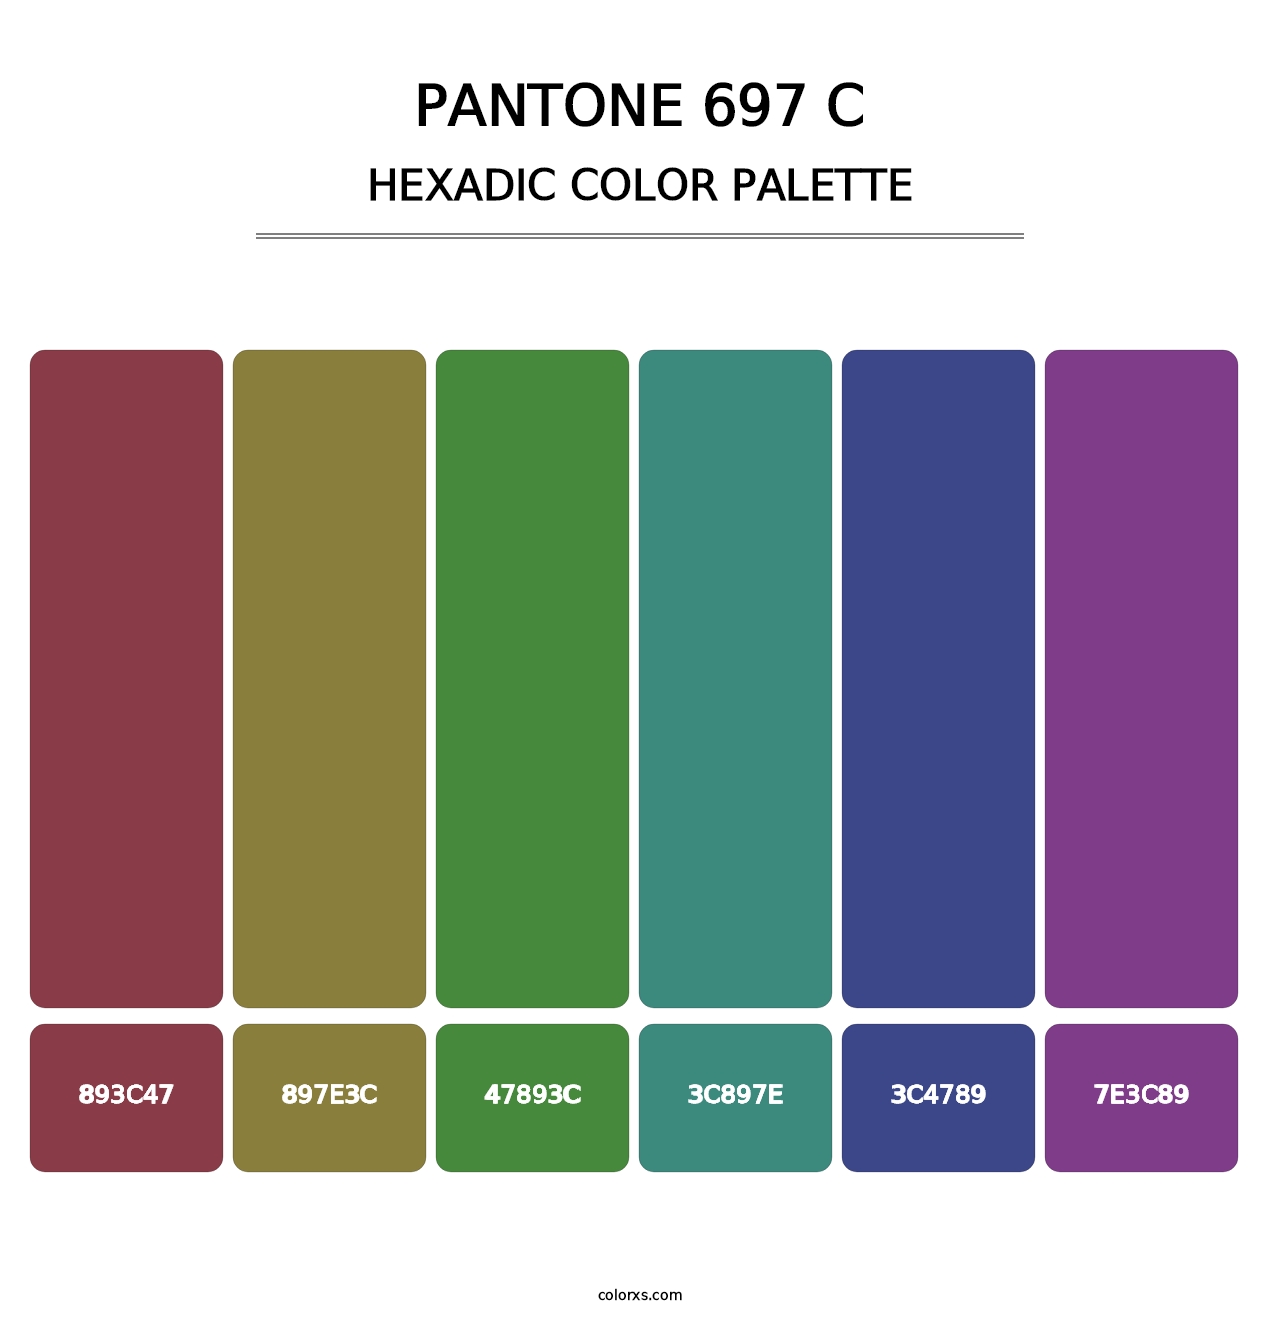 PANTONE 697 C - Hexadic Color Palette